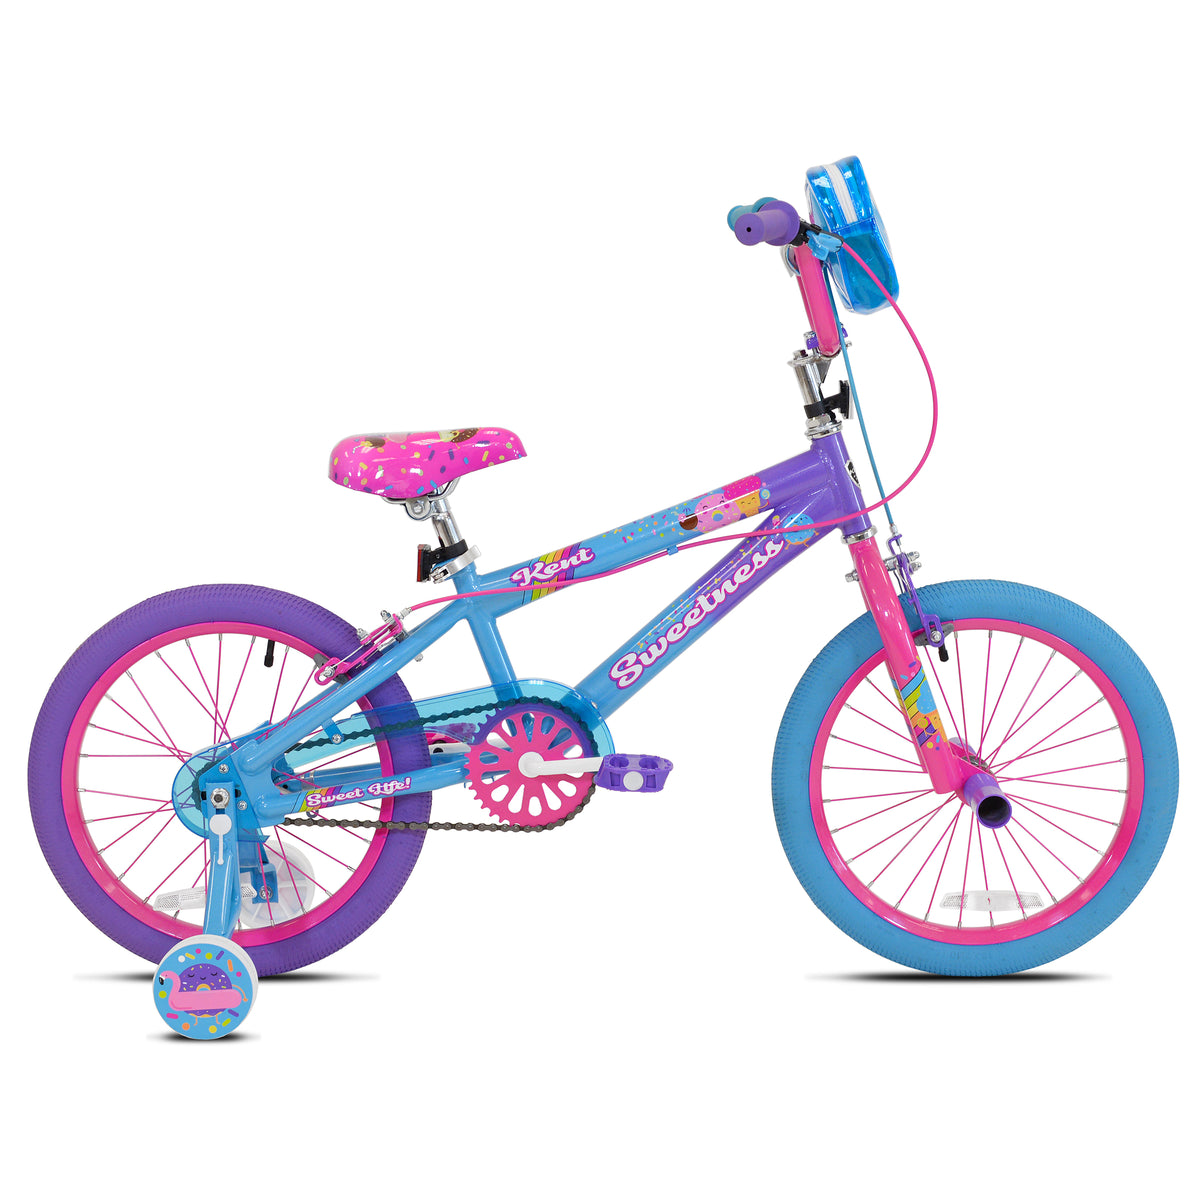 18" Kent Sweetness | Bike for Kids Ages 5-8